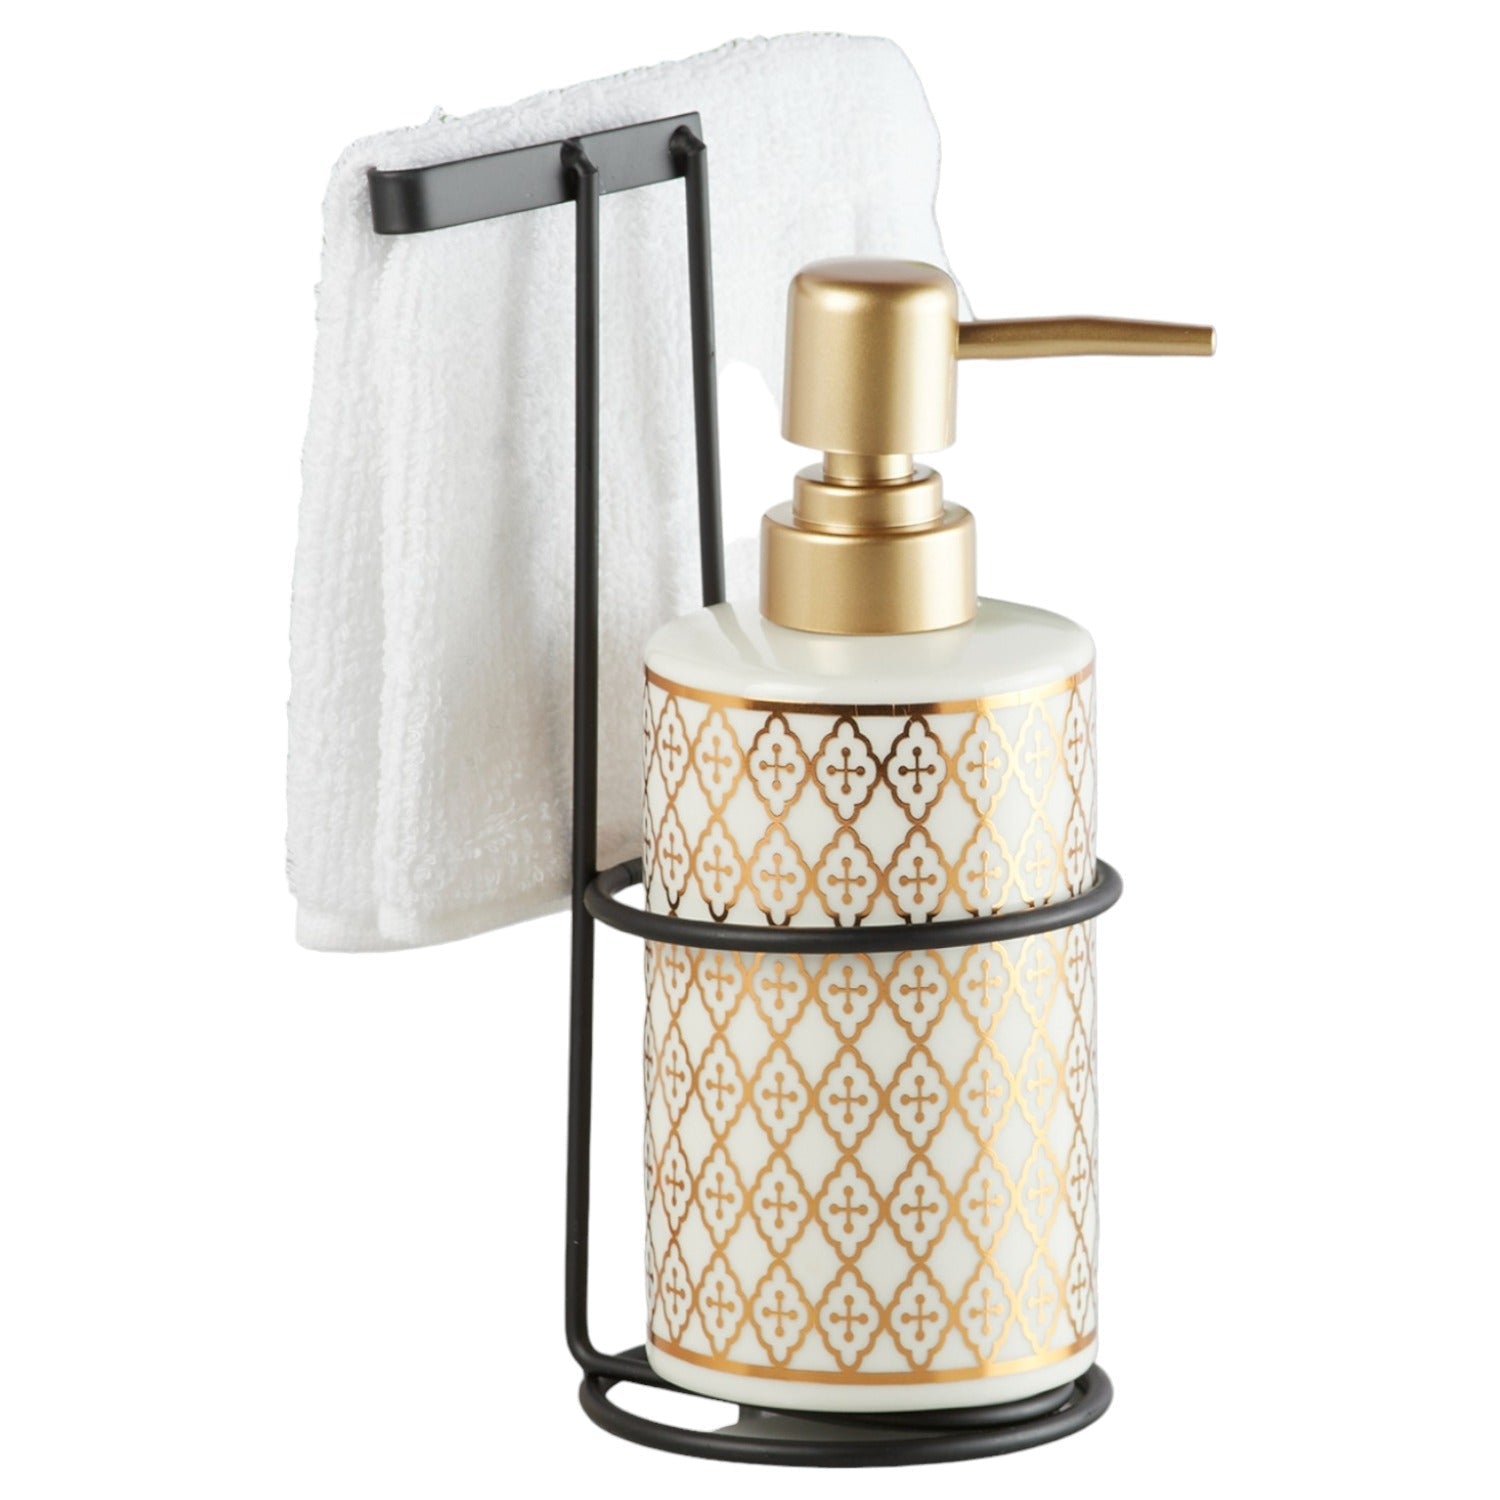 Ceramic Soap Dispenser handwash Pump for Bathroom, Set of 1, White/Gold (10293)